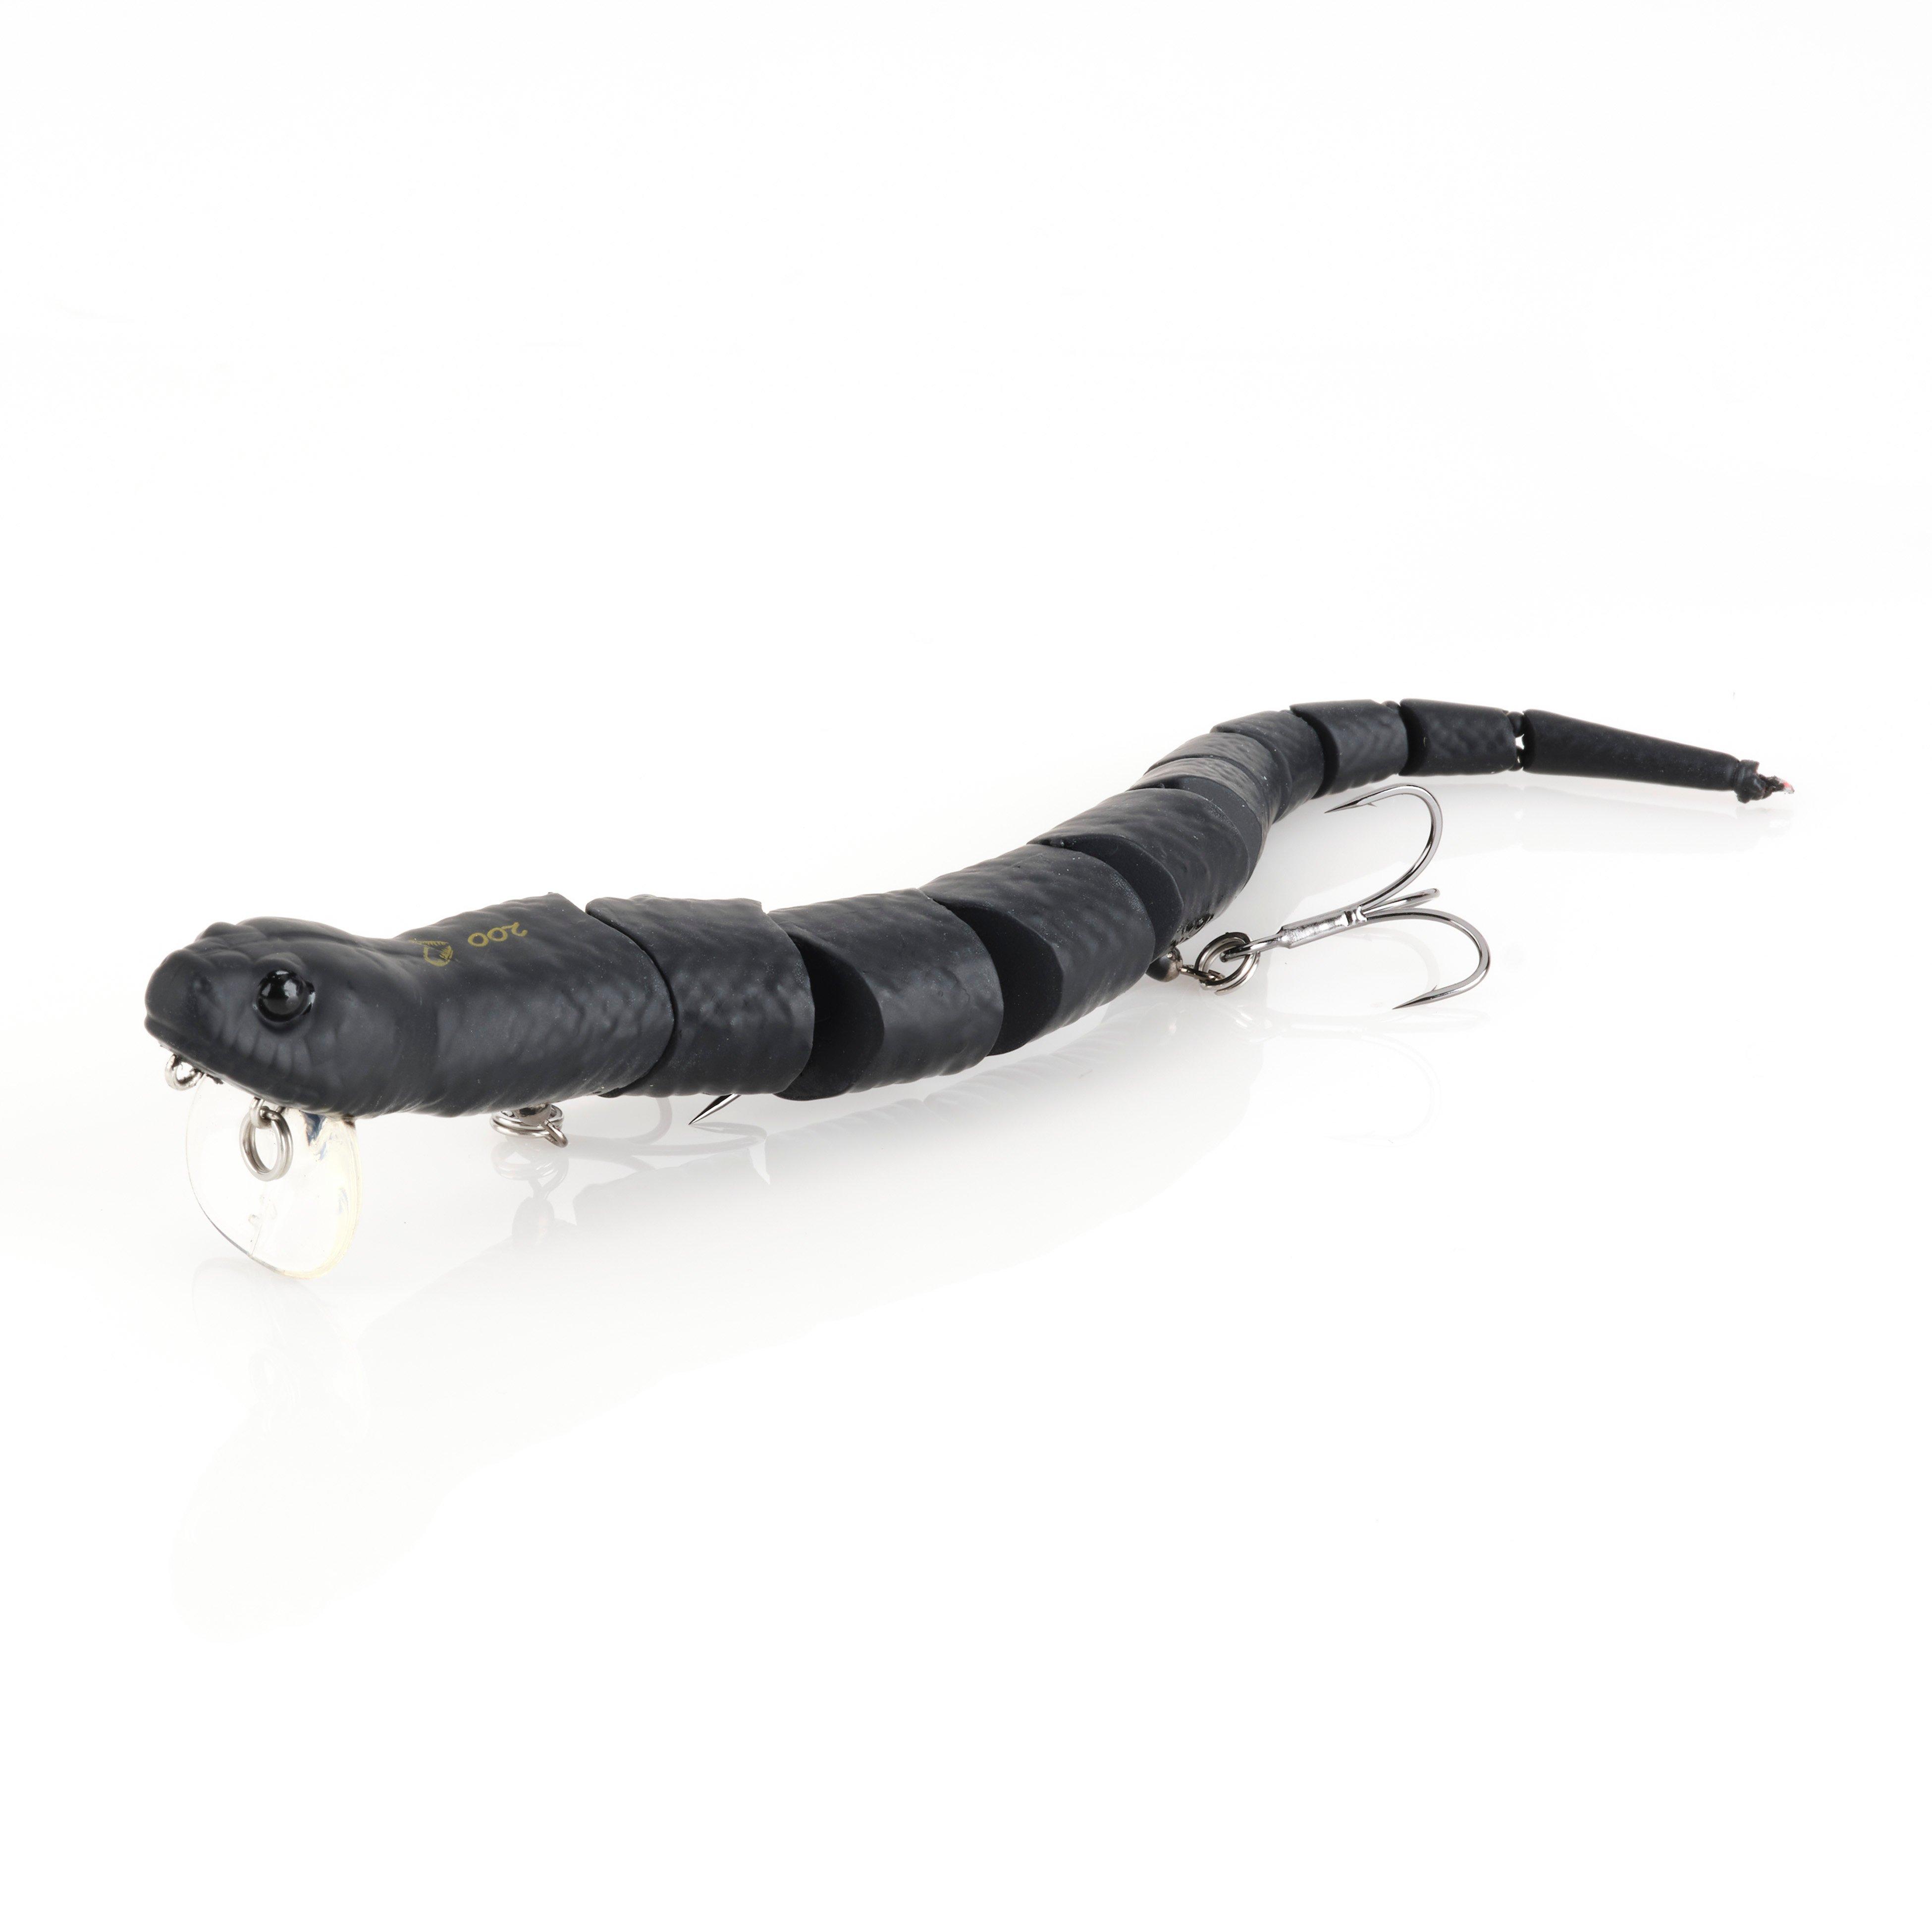 SAVAGE GEAR 3D Wake Snake F 8inch - 【Bass Trout Salt lure fishing web order  shop】BackLash｜Japanese fishing tackle｜